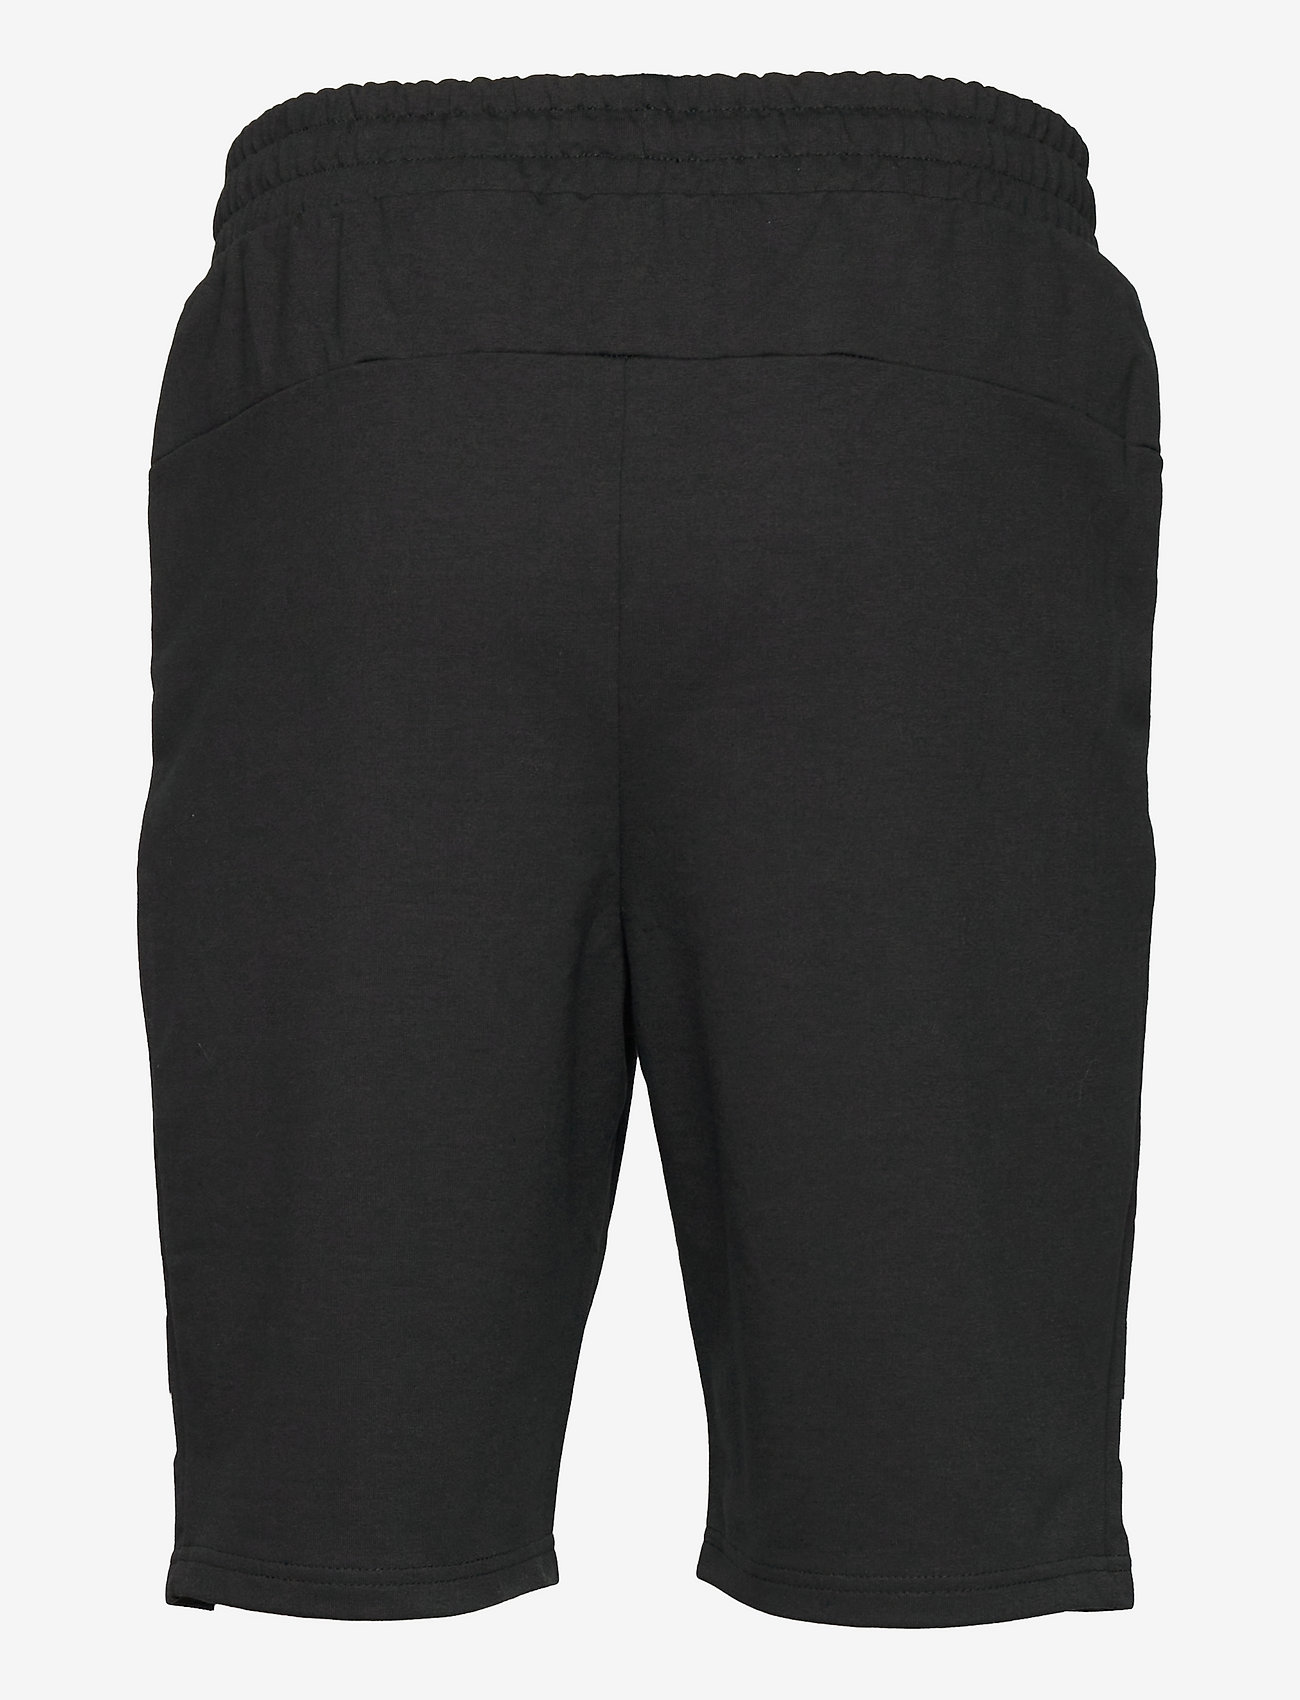 Hummel - hmlRAY 2.0 SHORTS - sports shorts - black - 1